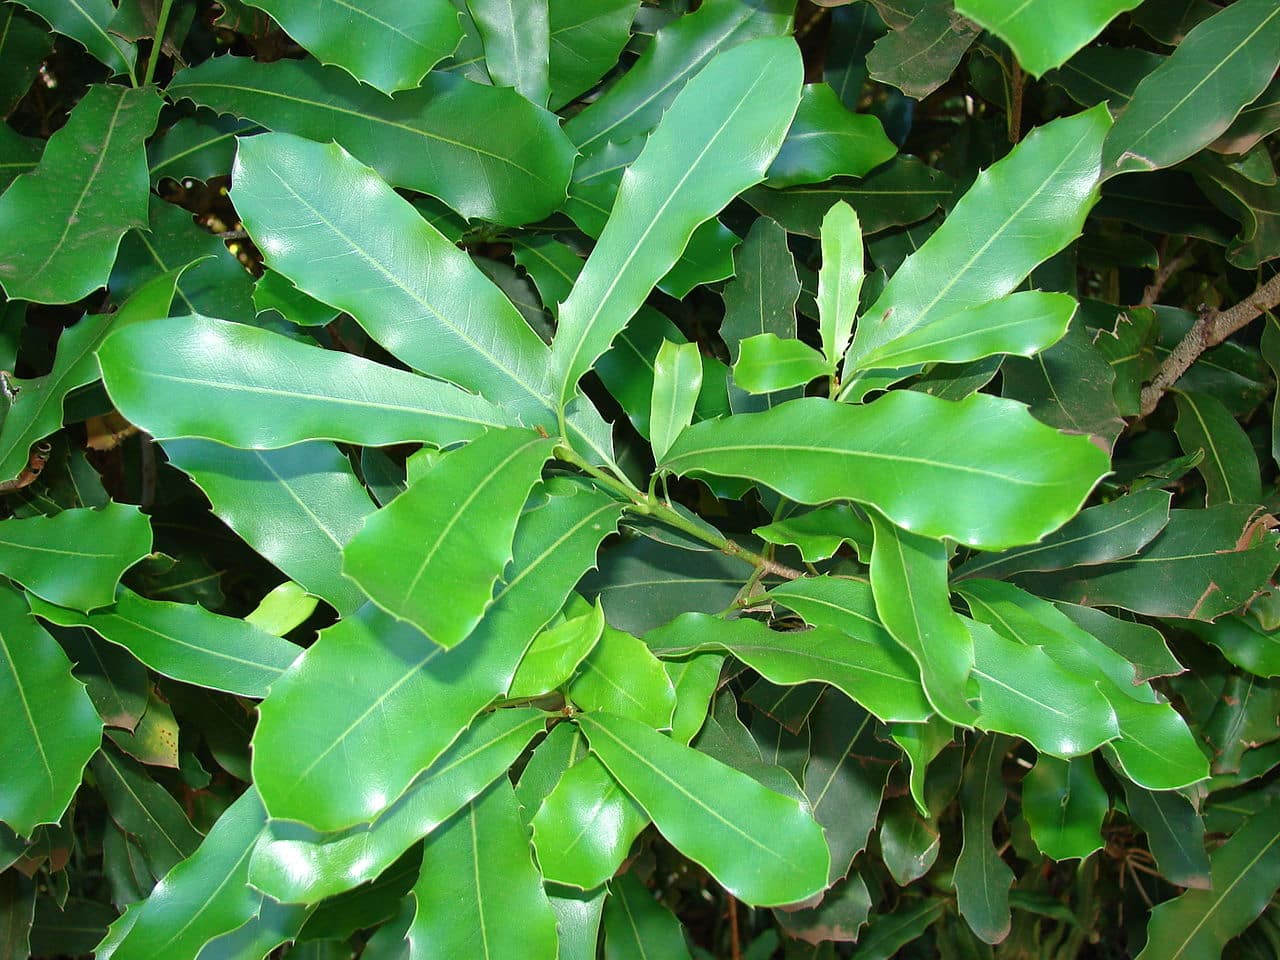 Macadamia is a tropical tree